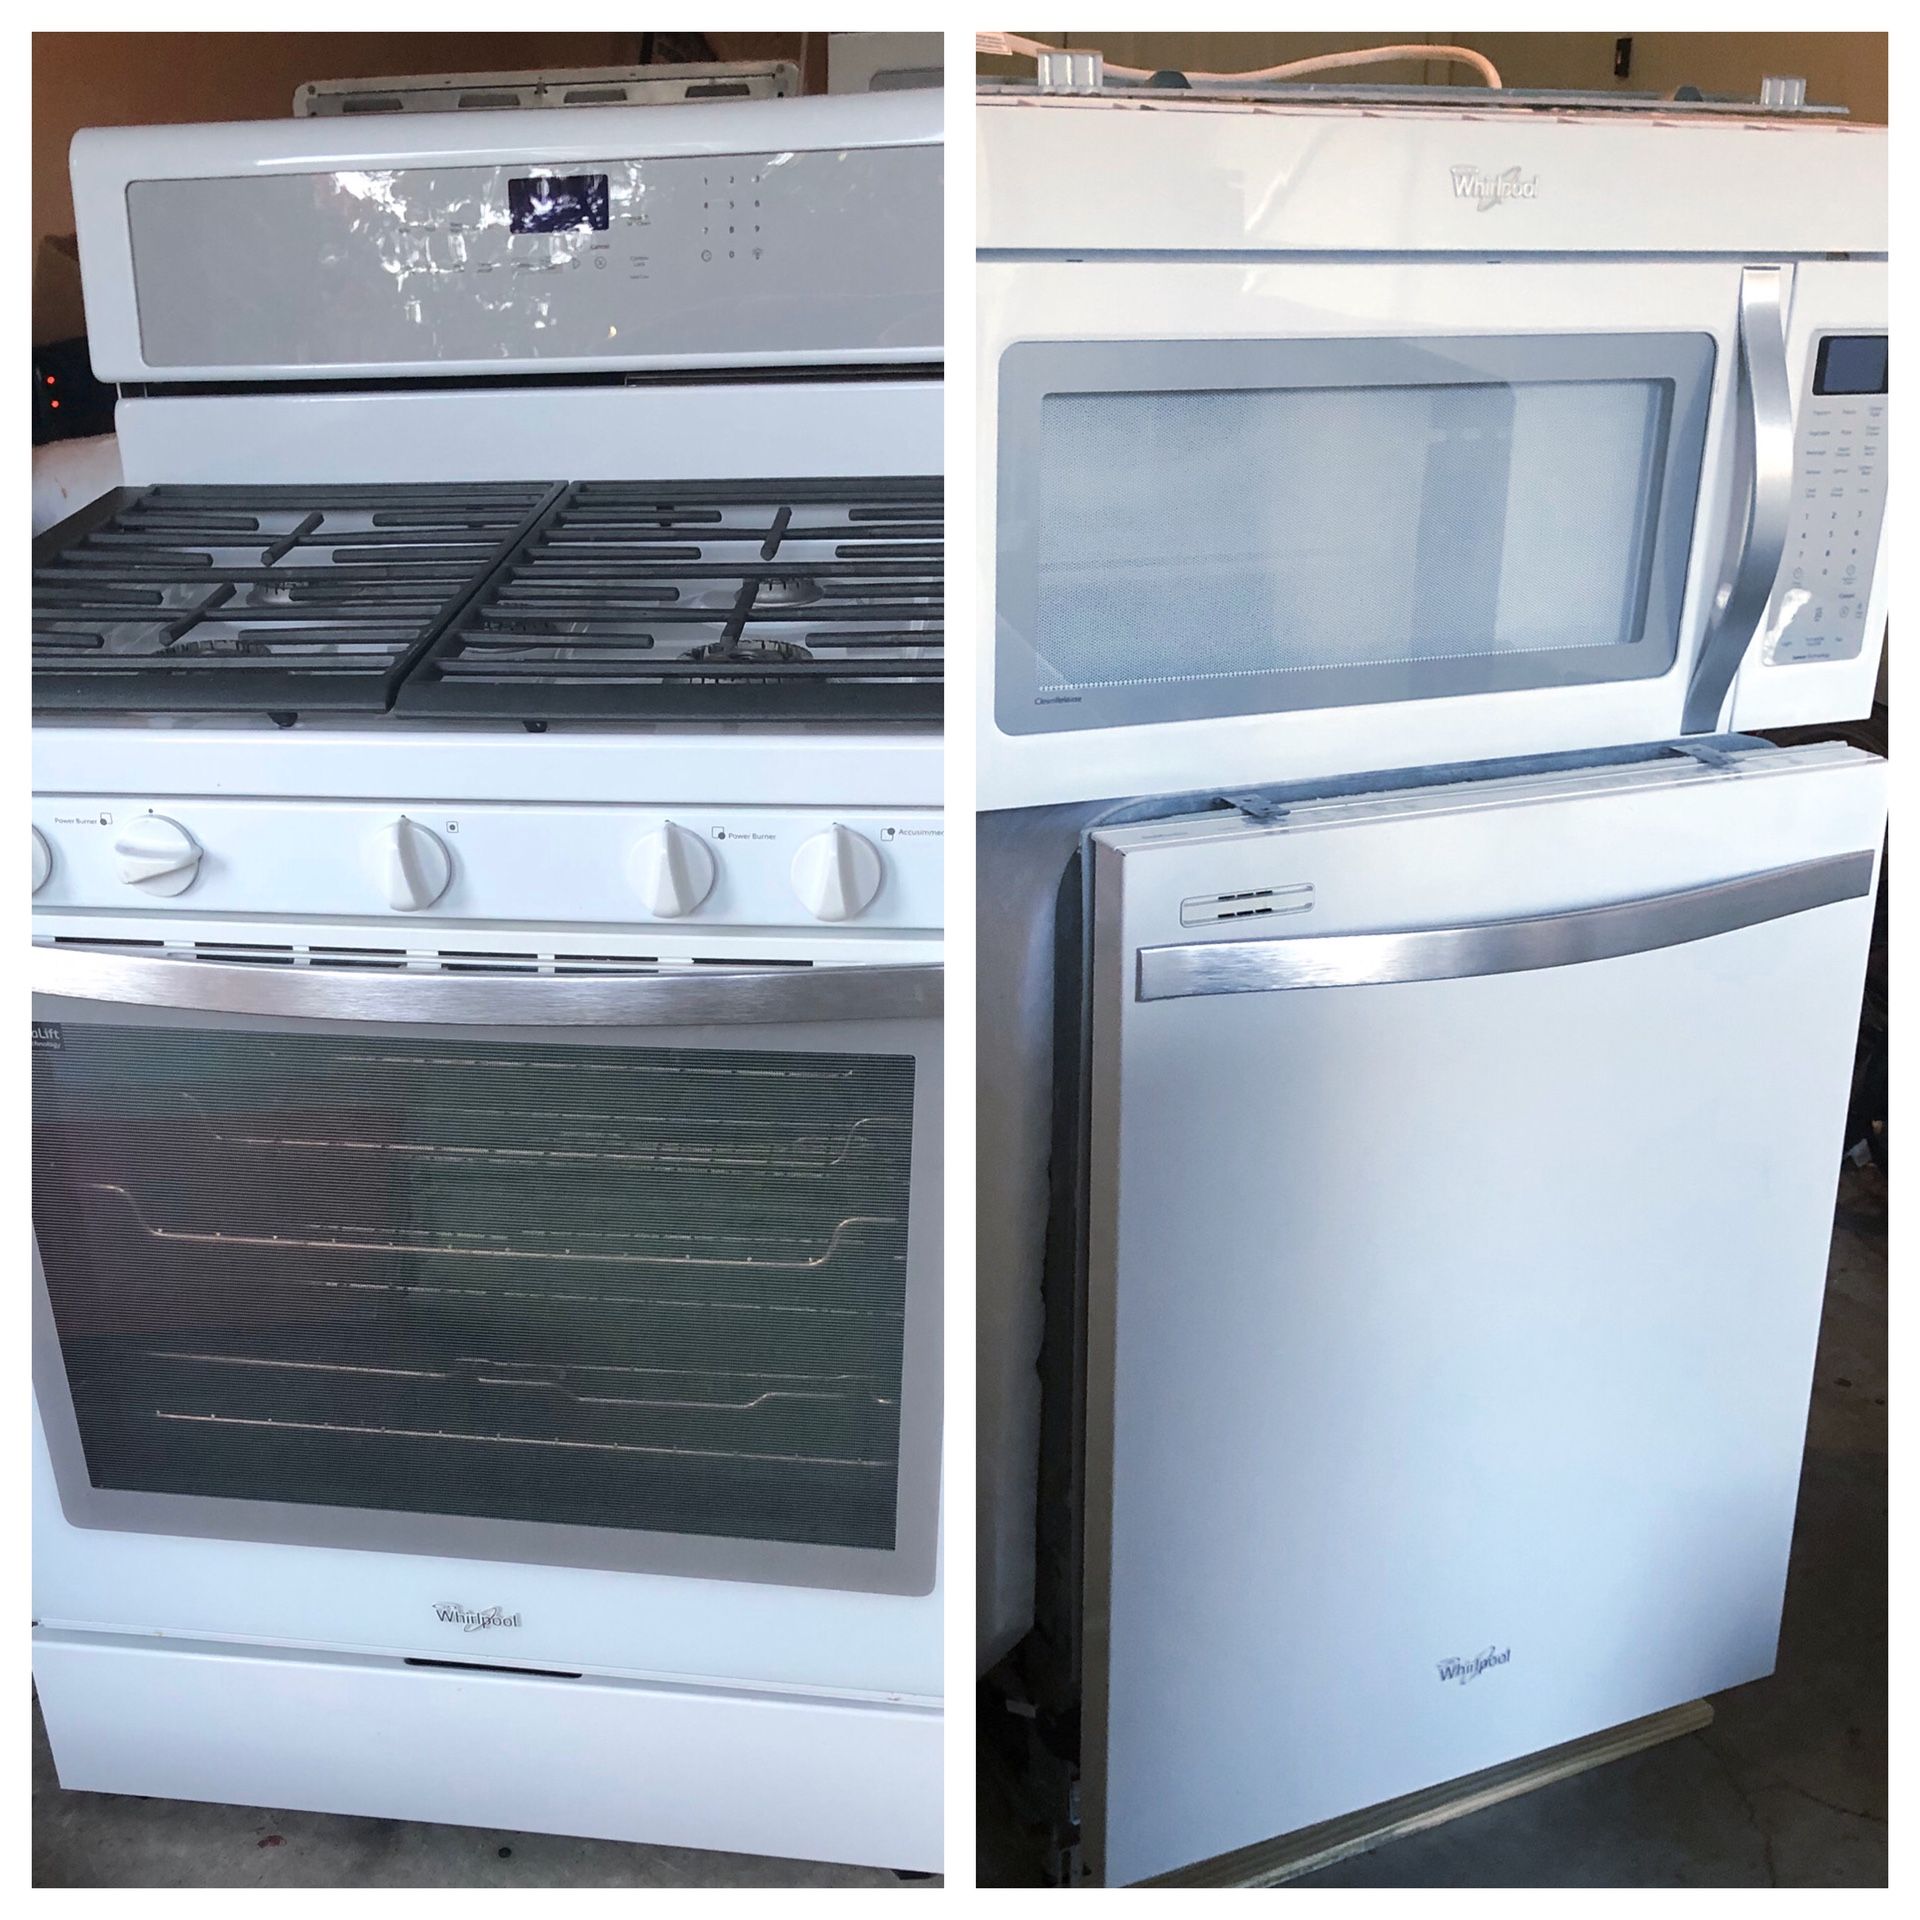 Whirlpool appliance set- dishwasher, over range microwave and gas range